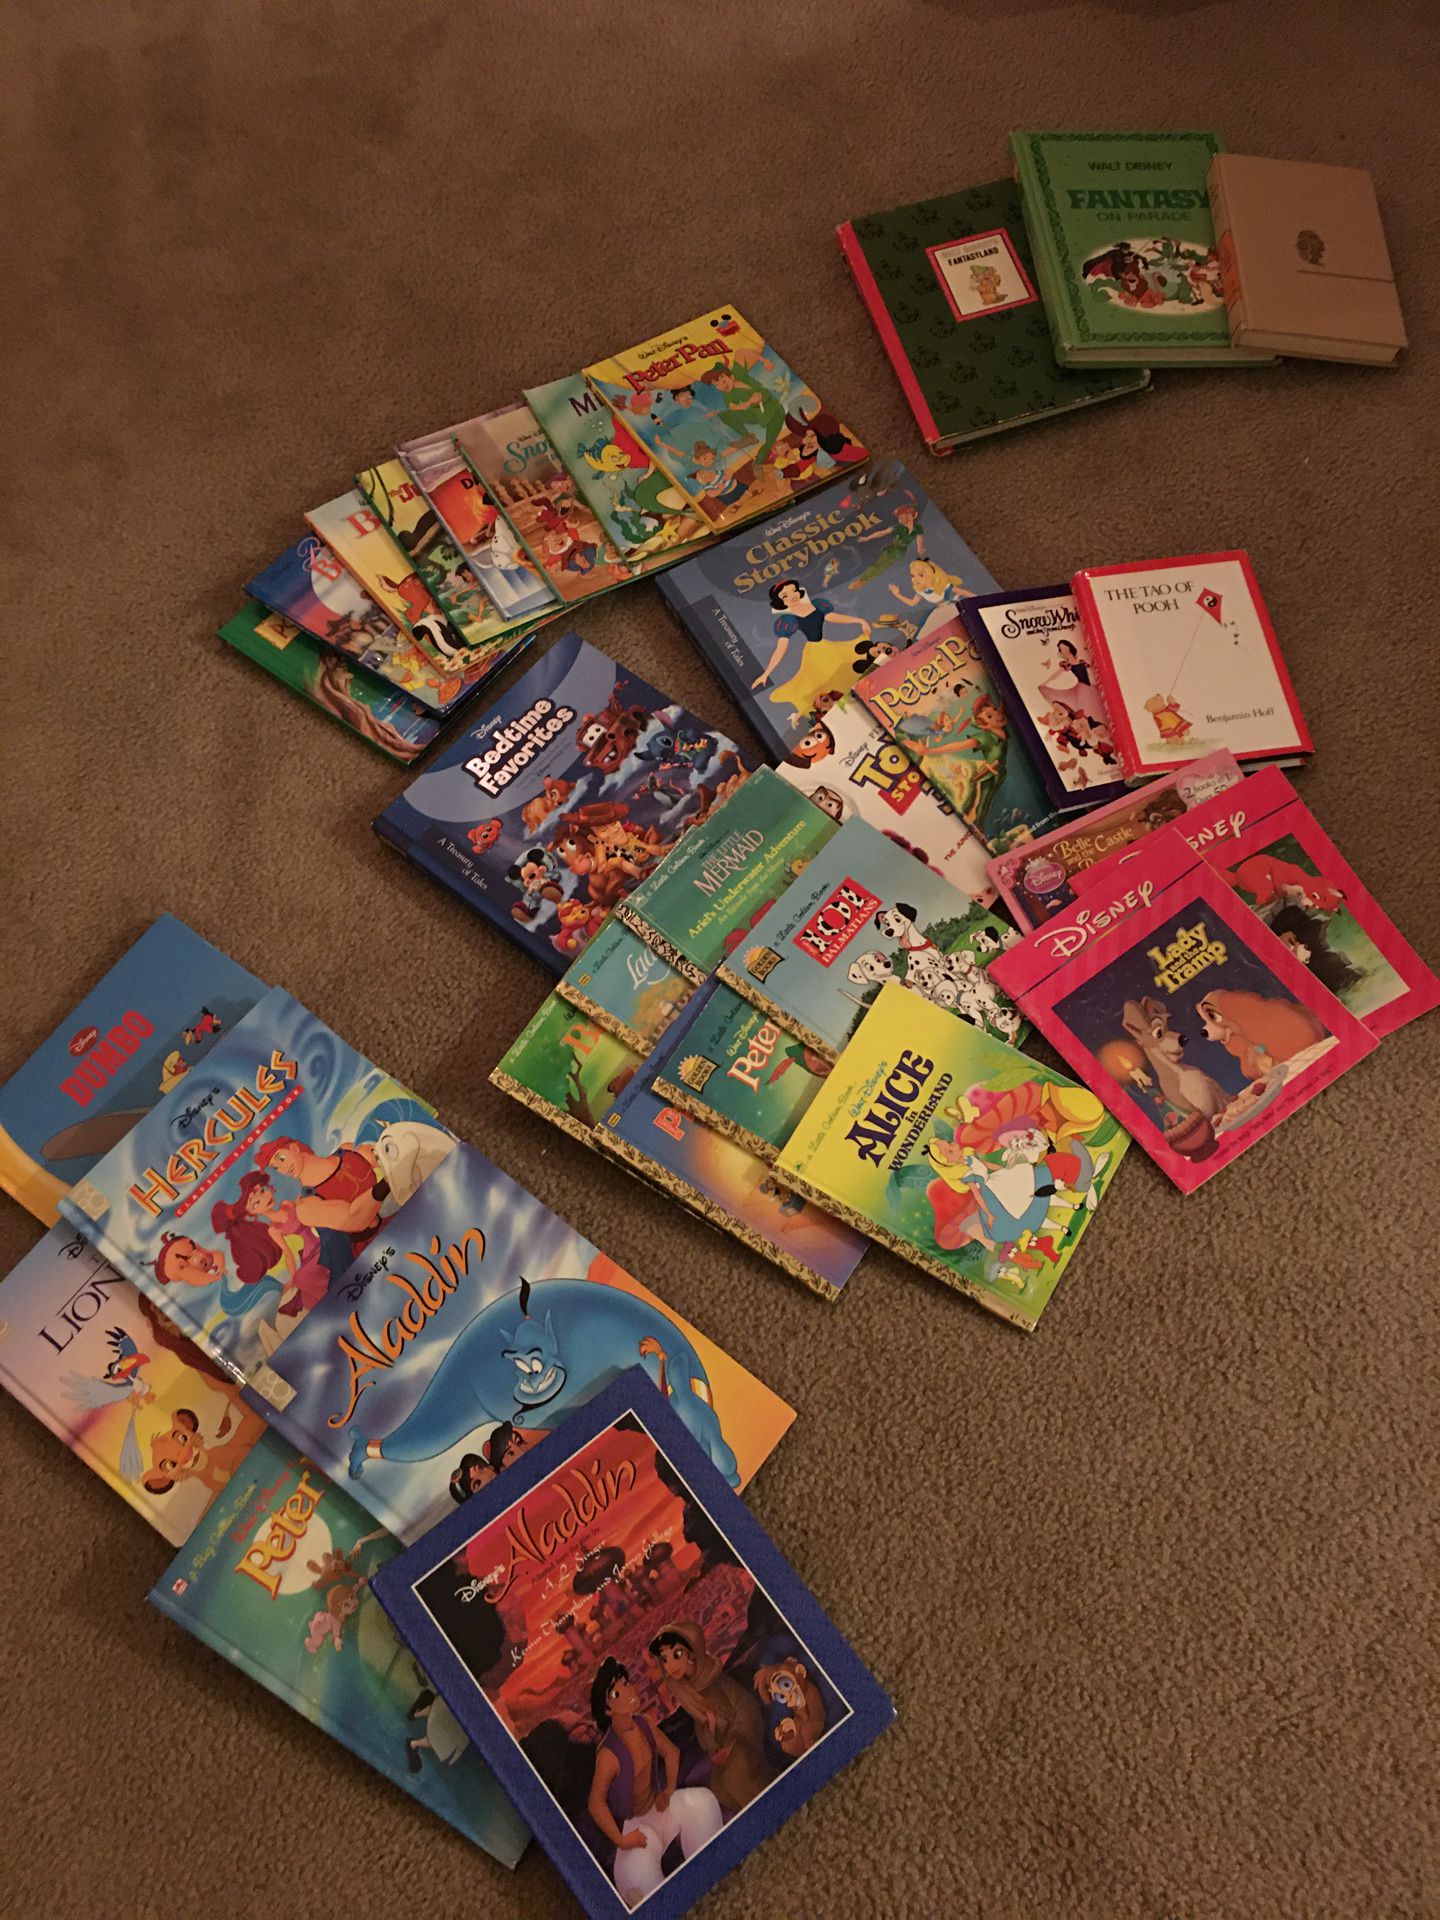 33 Disney books